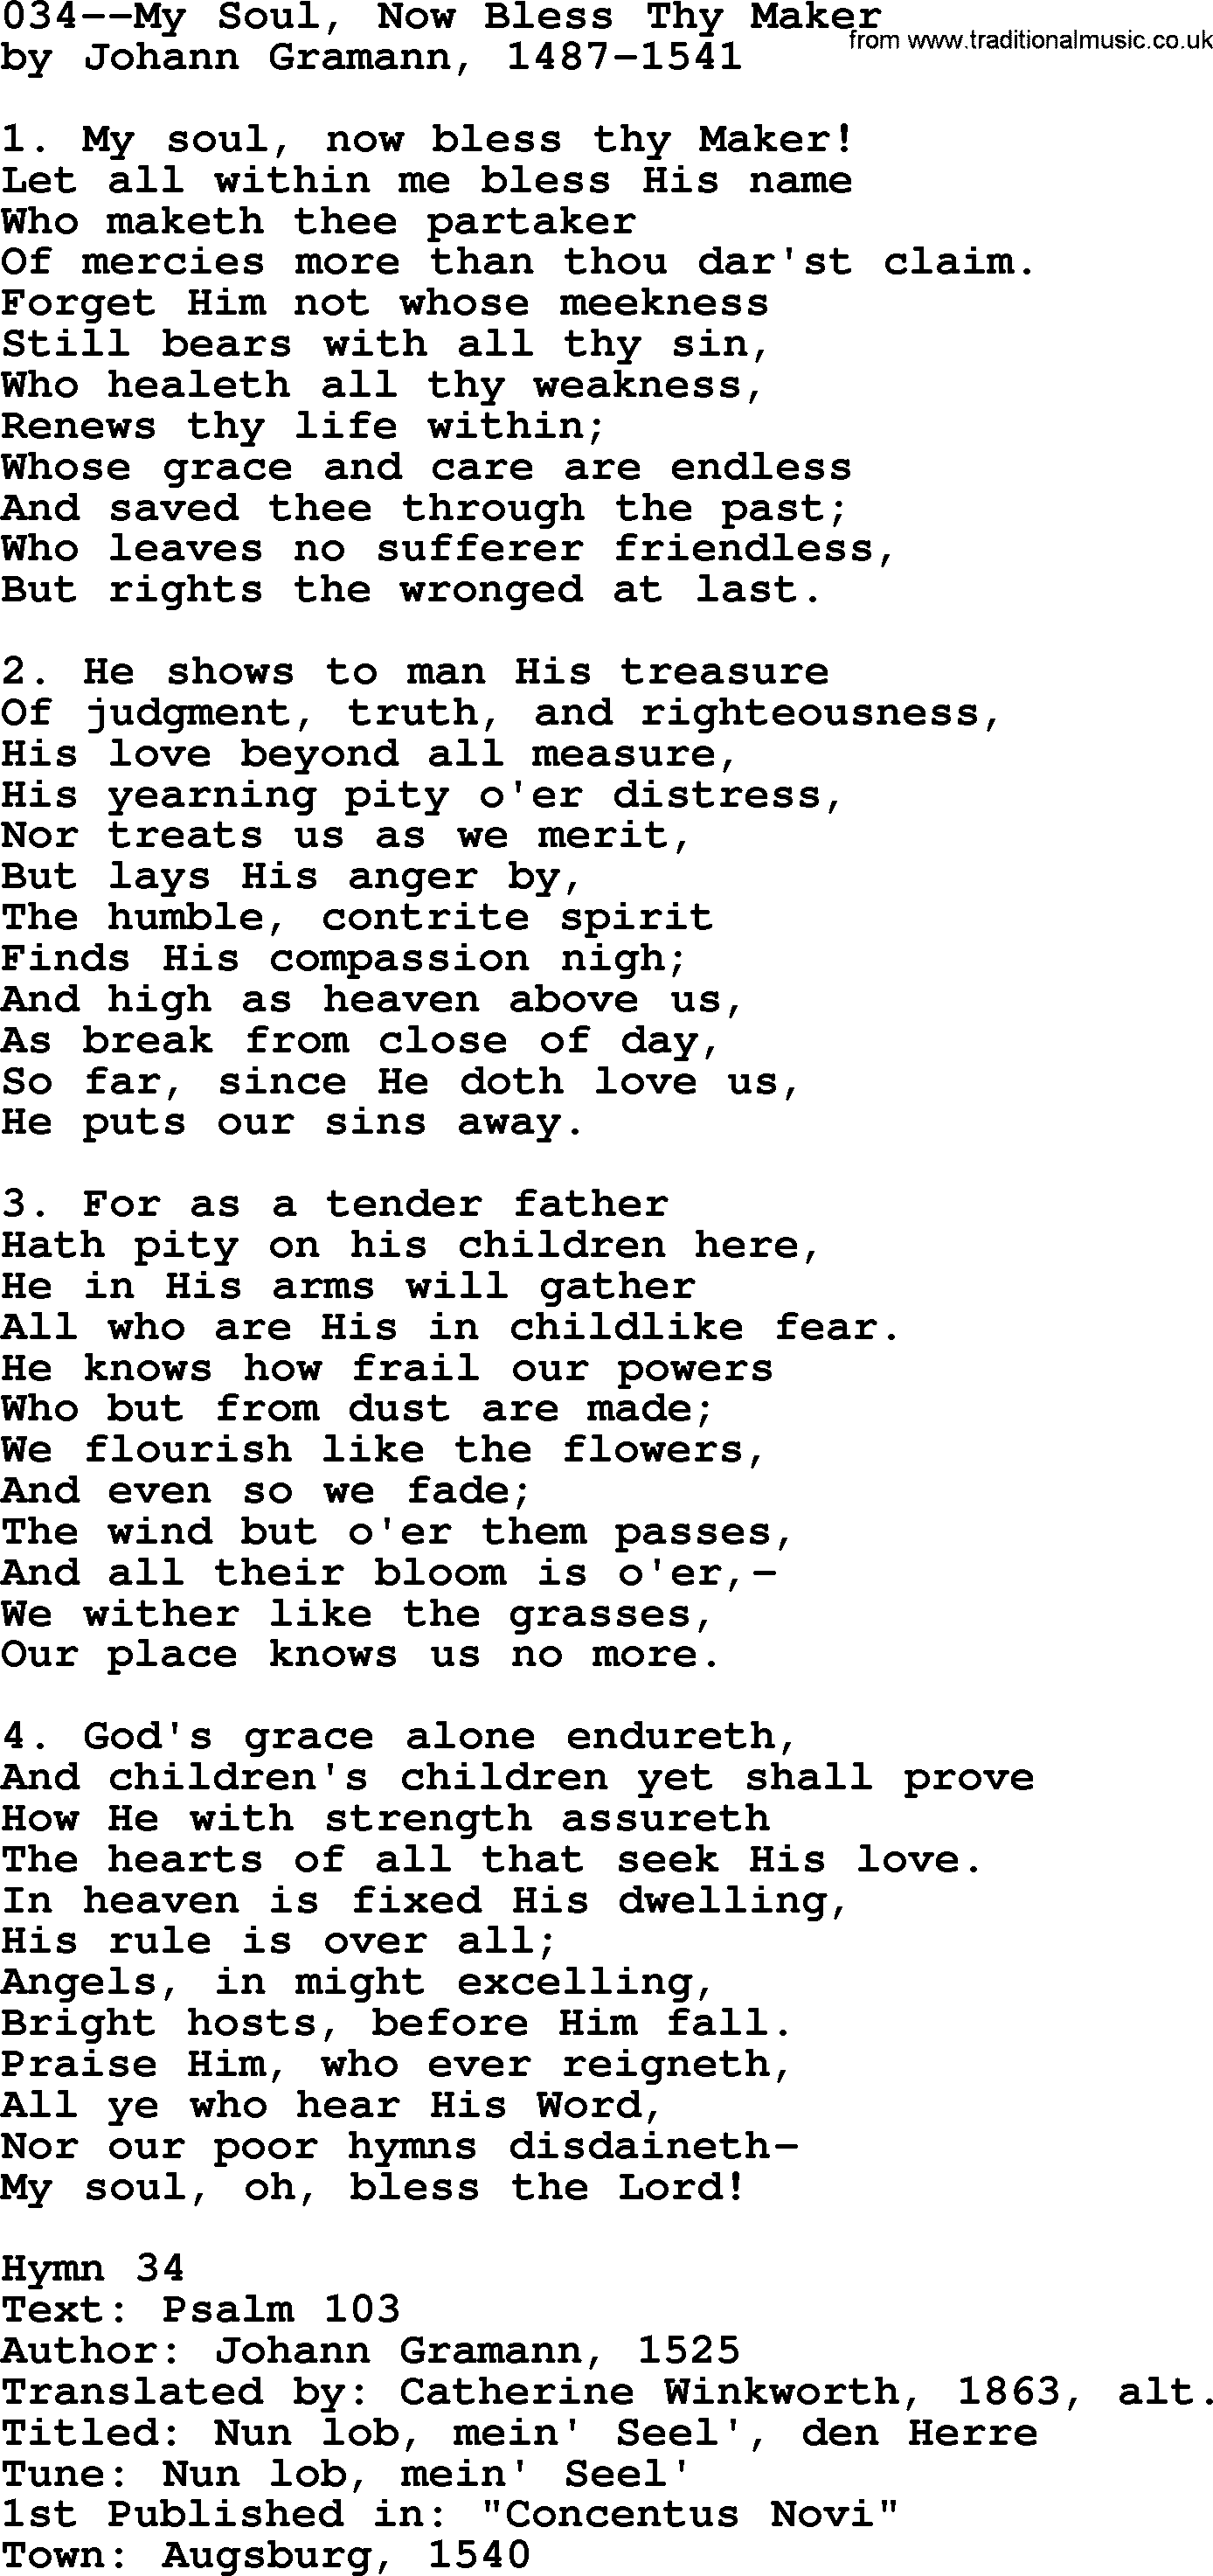 Lutheran Hymn: 034--My Soul, Now Bless Thy Maker.txt lyrics with PDF